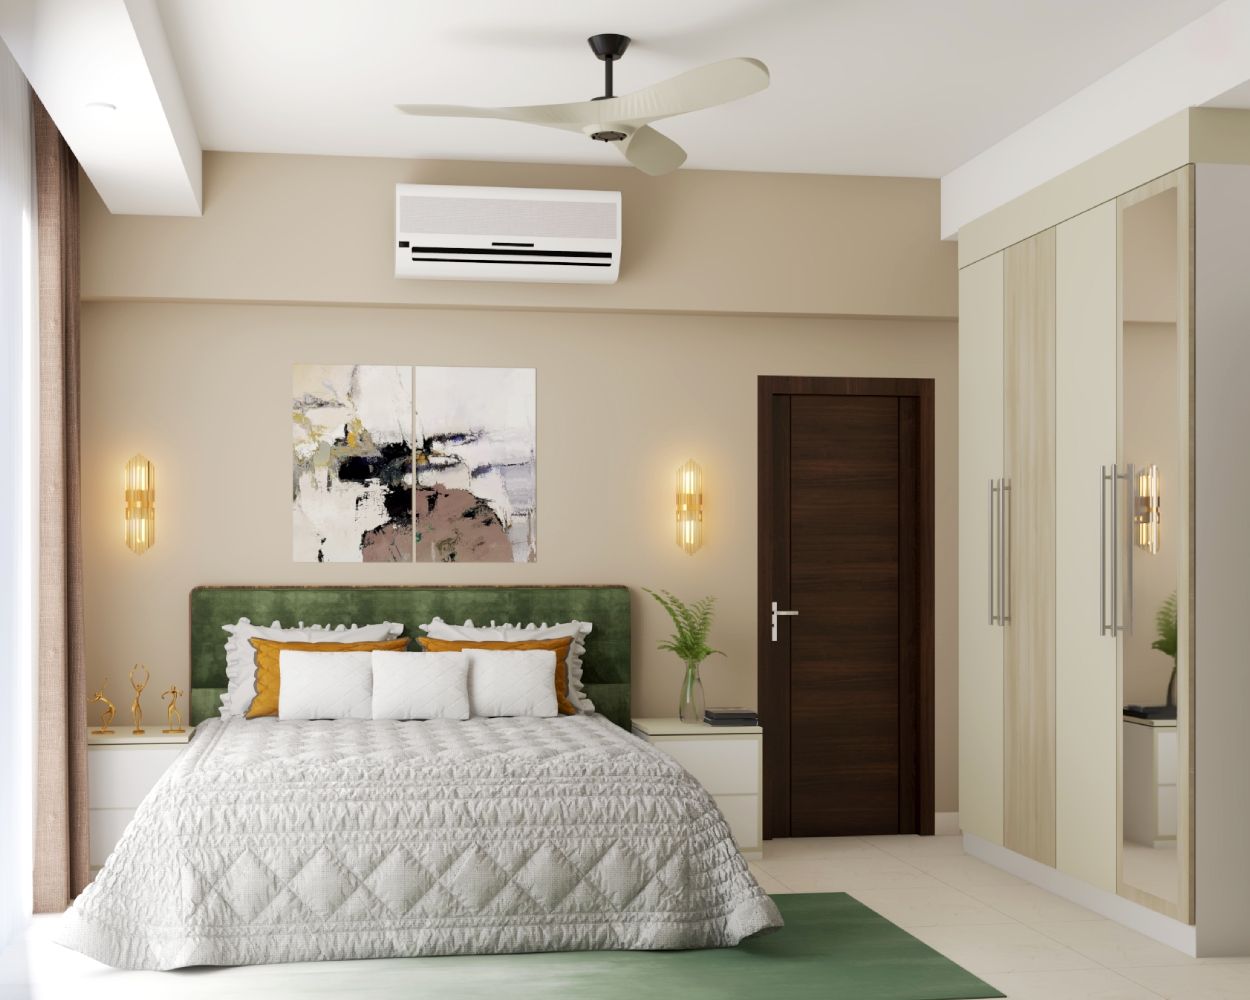 Modern Master Bedroom Design With Green Headboard